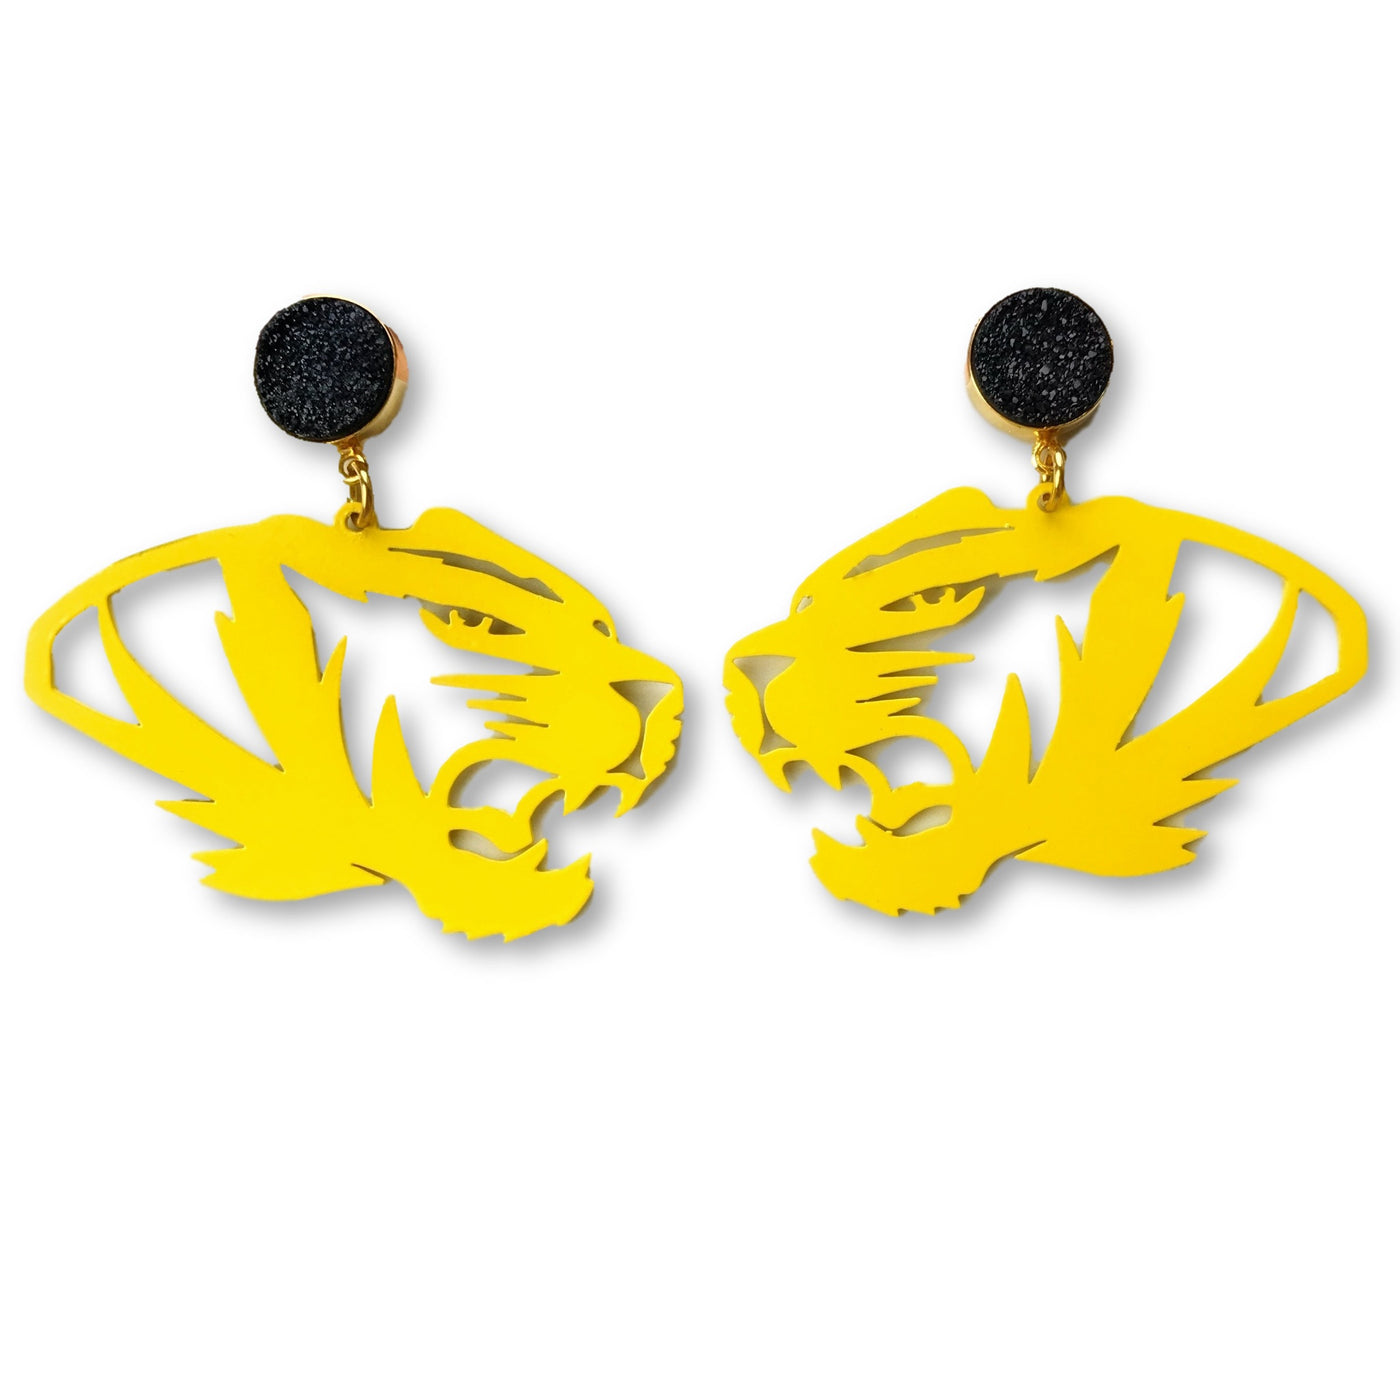 Mizzou Yellow Tiger Earrings with Black Druzy